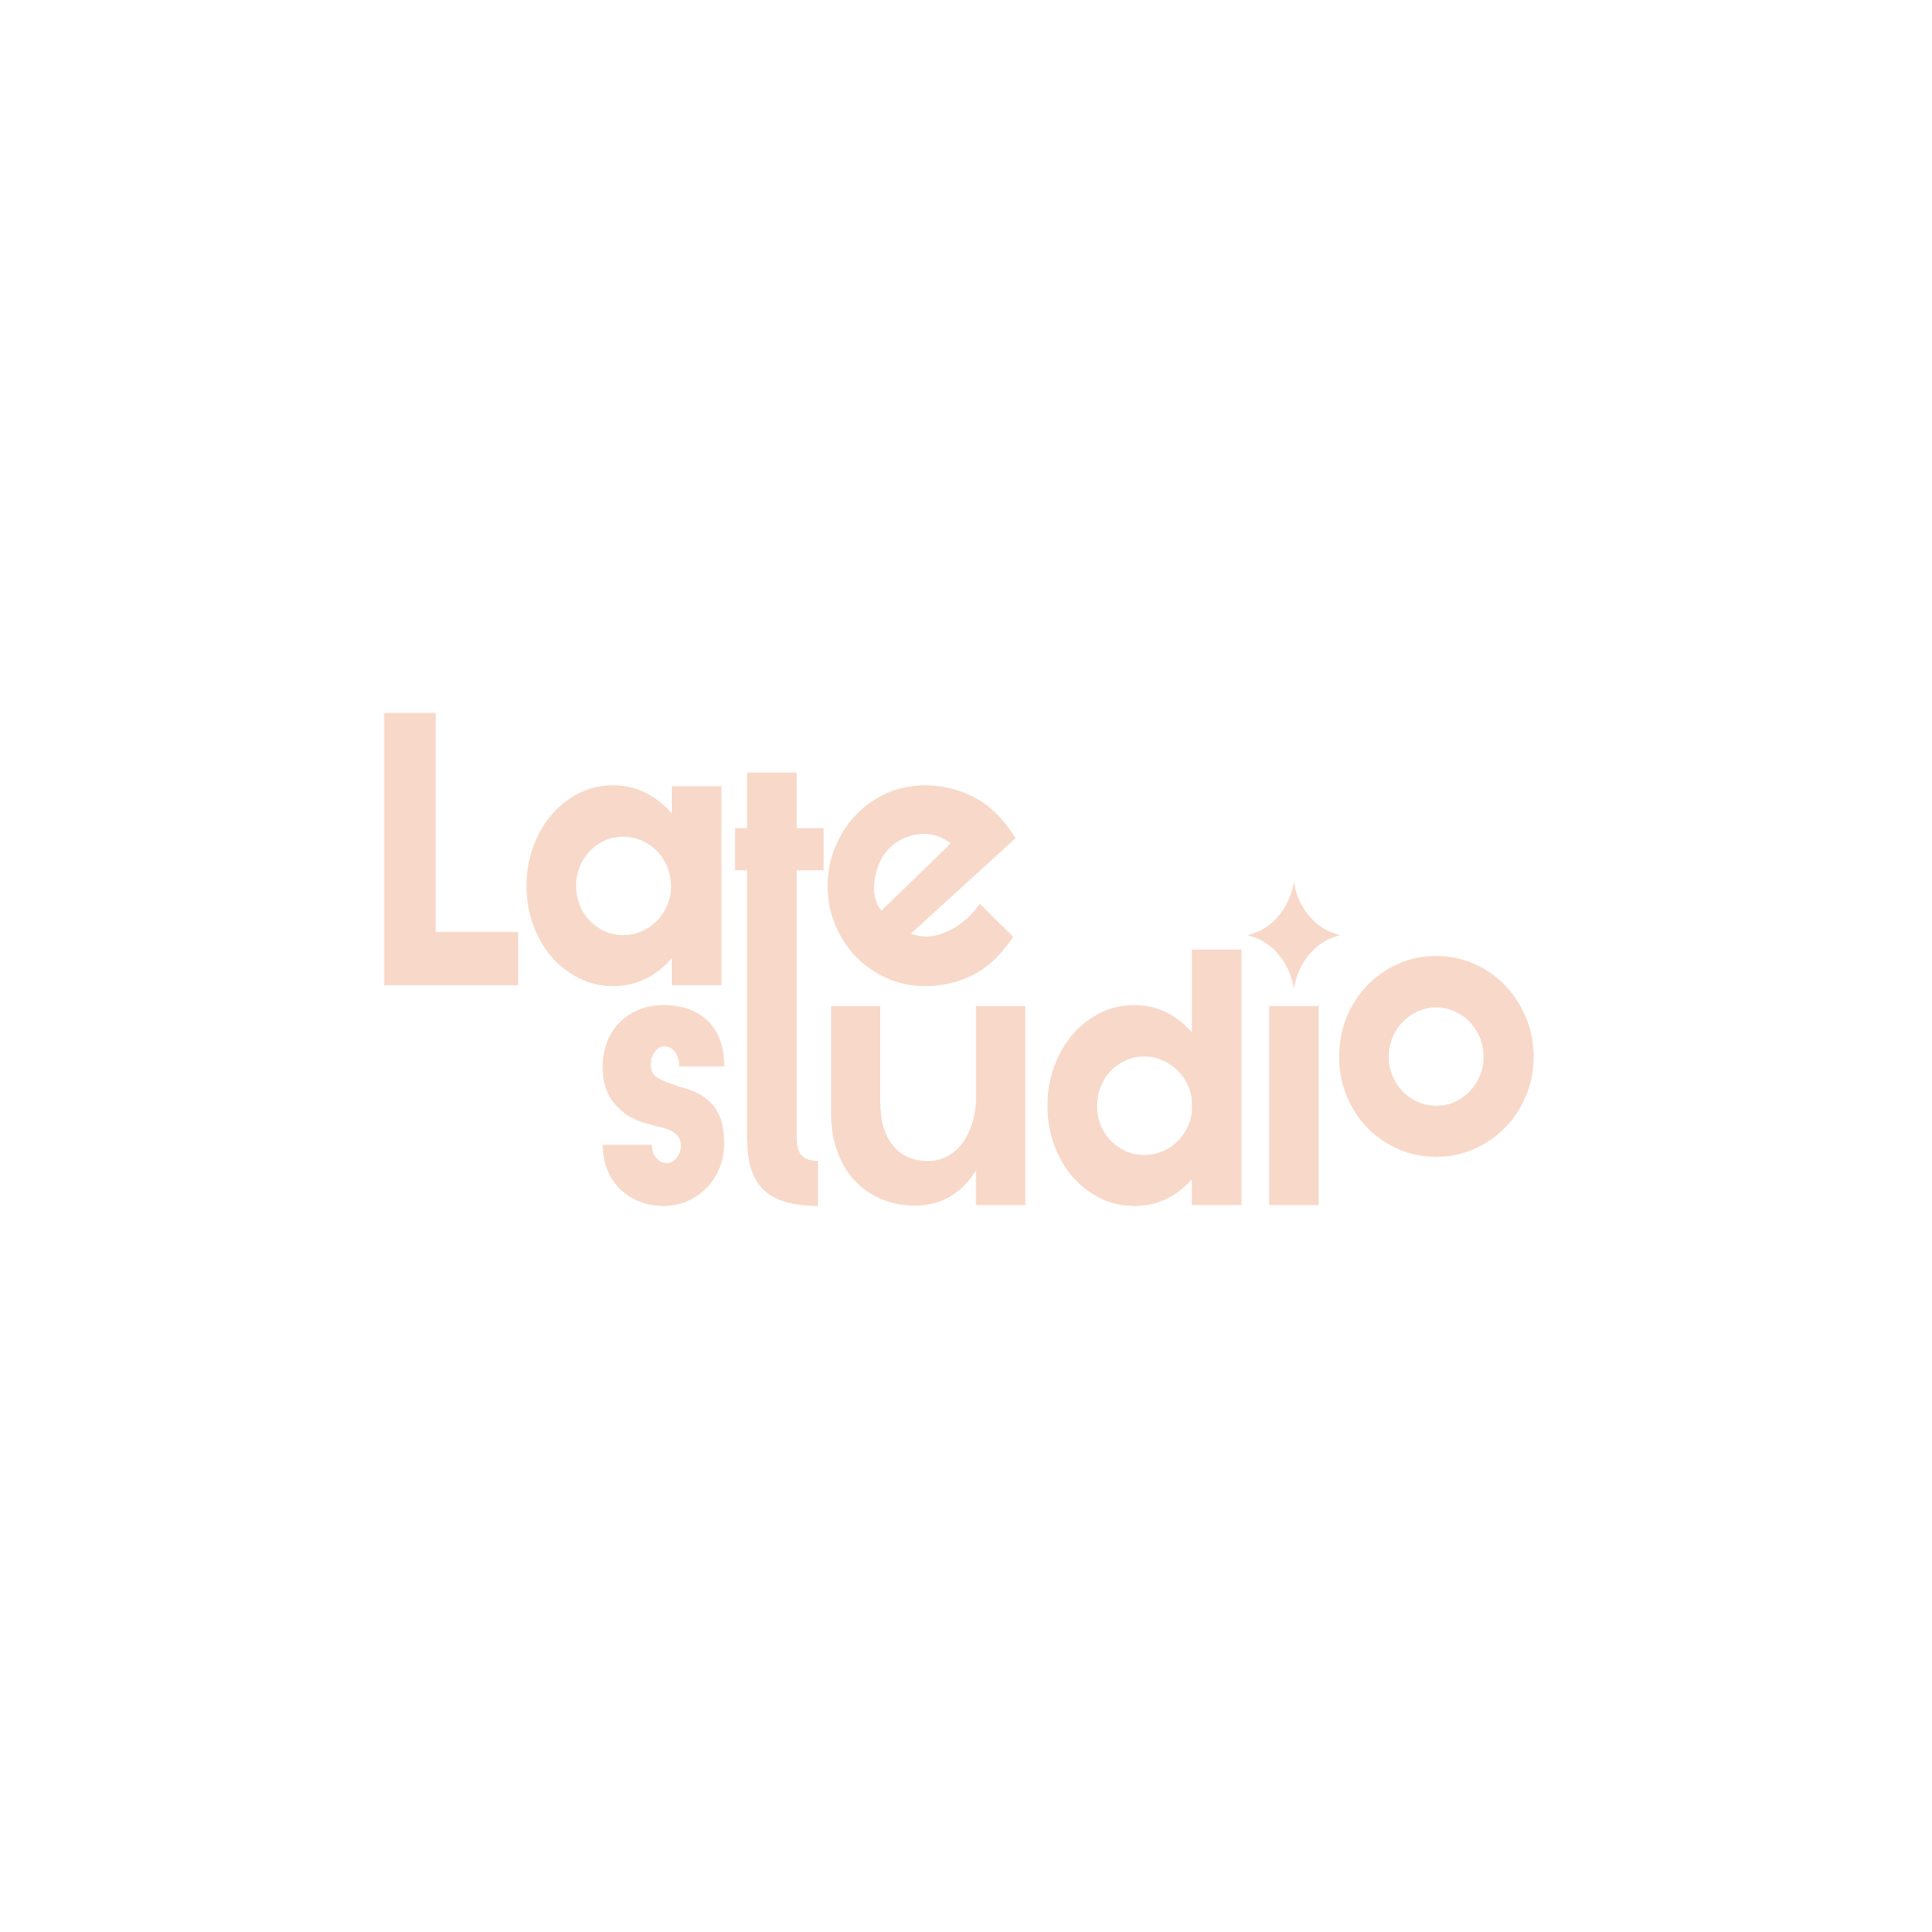 Latestudio logo